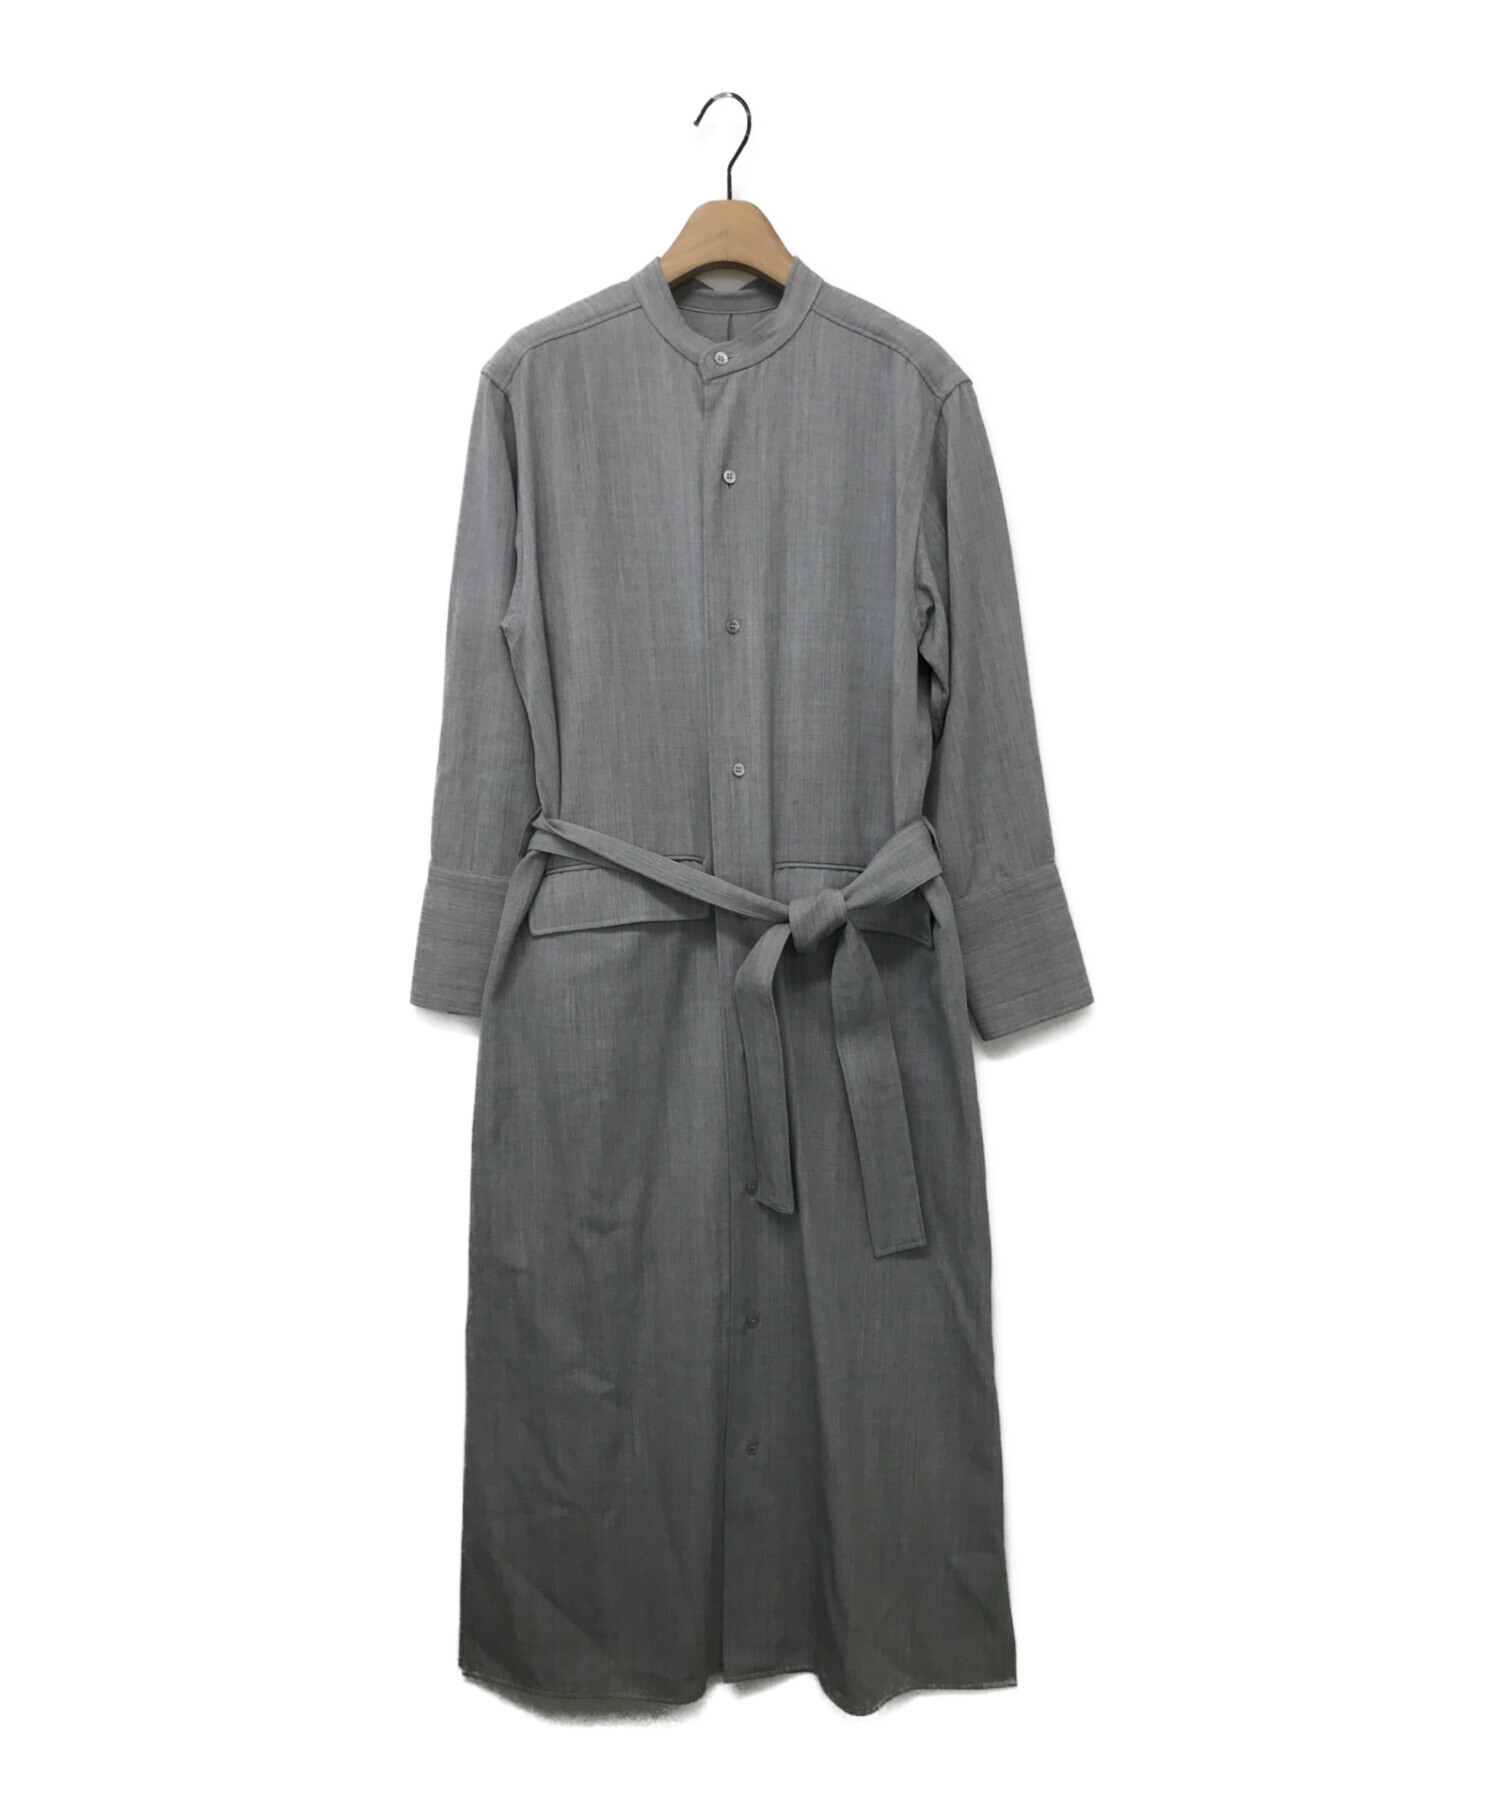 POSTELEGANT (ポステレガント) WOOL LONG SHIRT DRESS グレー サイズ:L